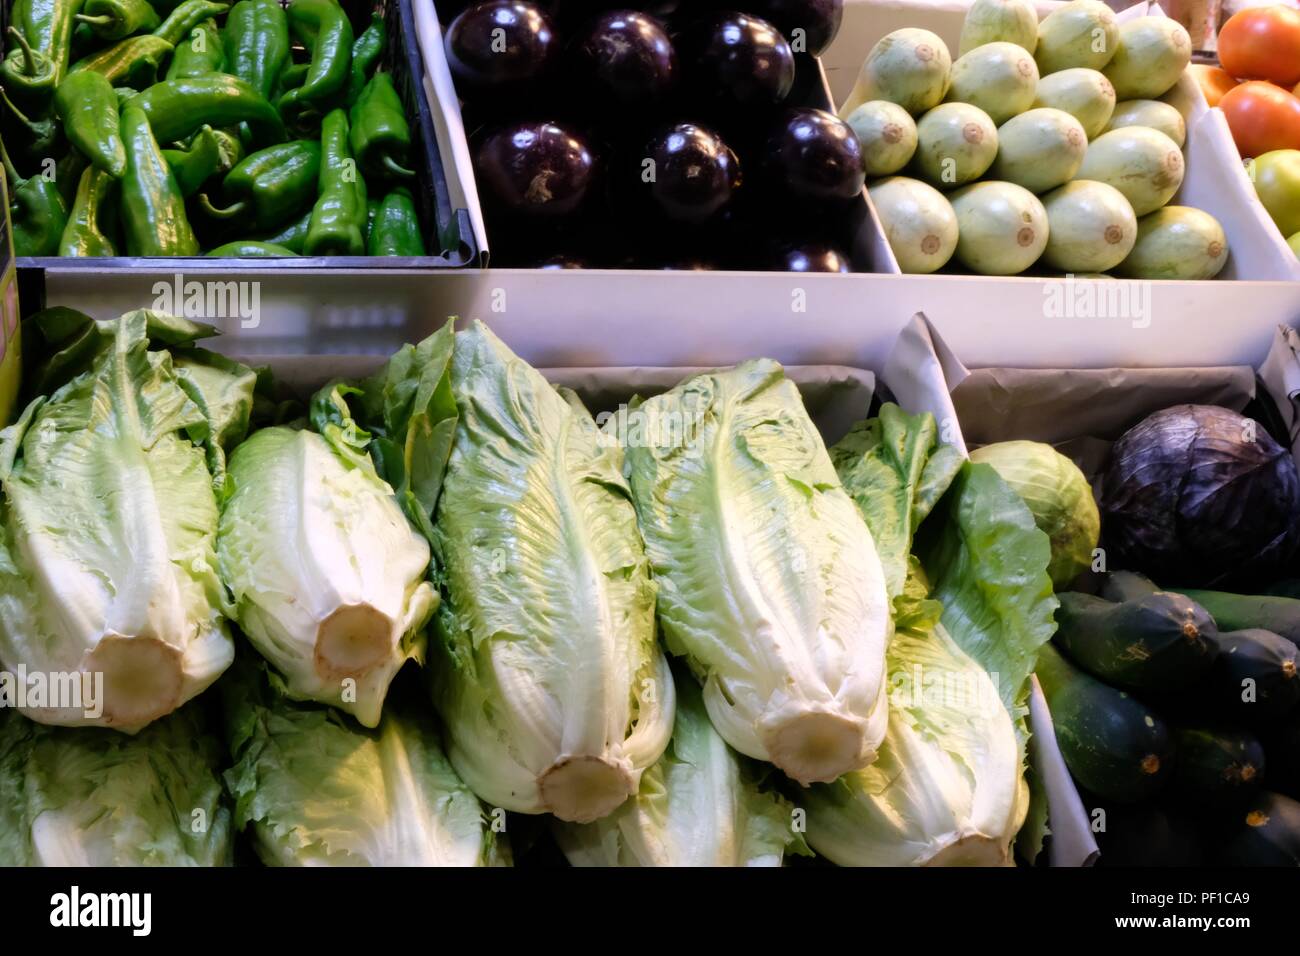 Vegetables on a market shelf Stock Photo